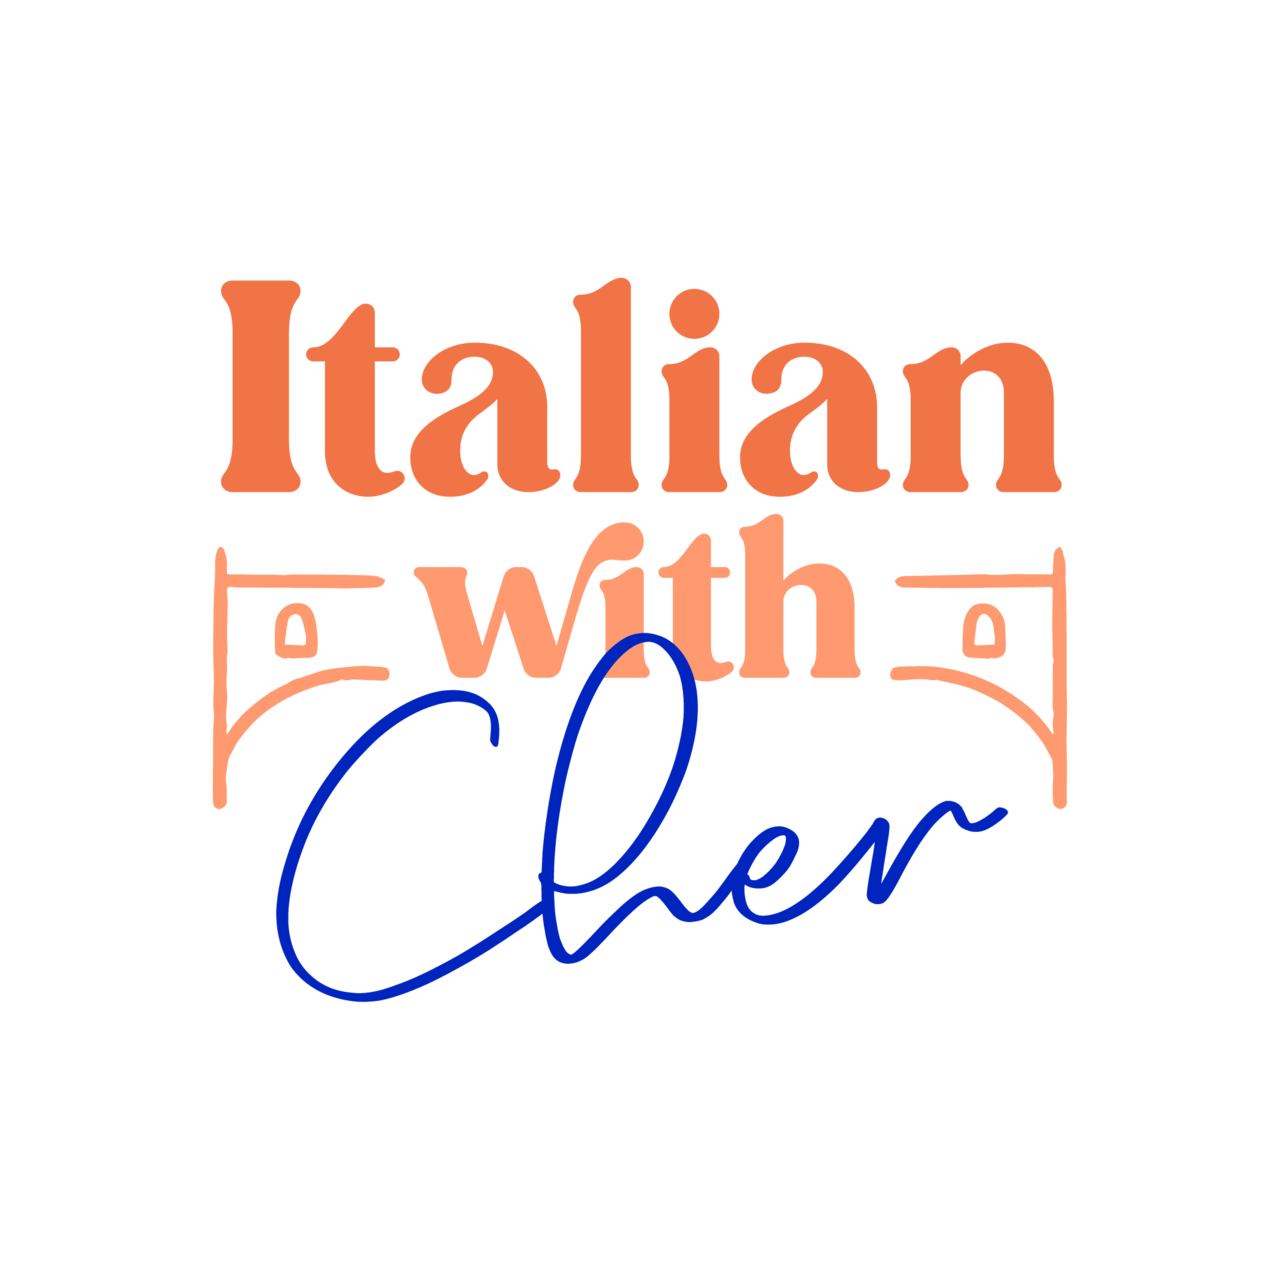 Italian with Cher